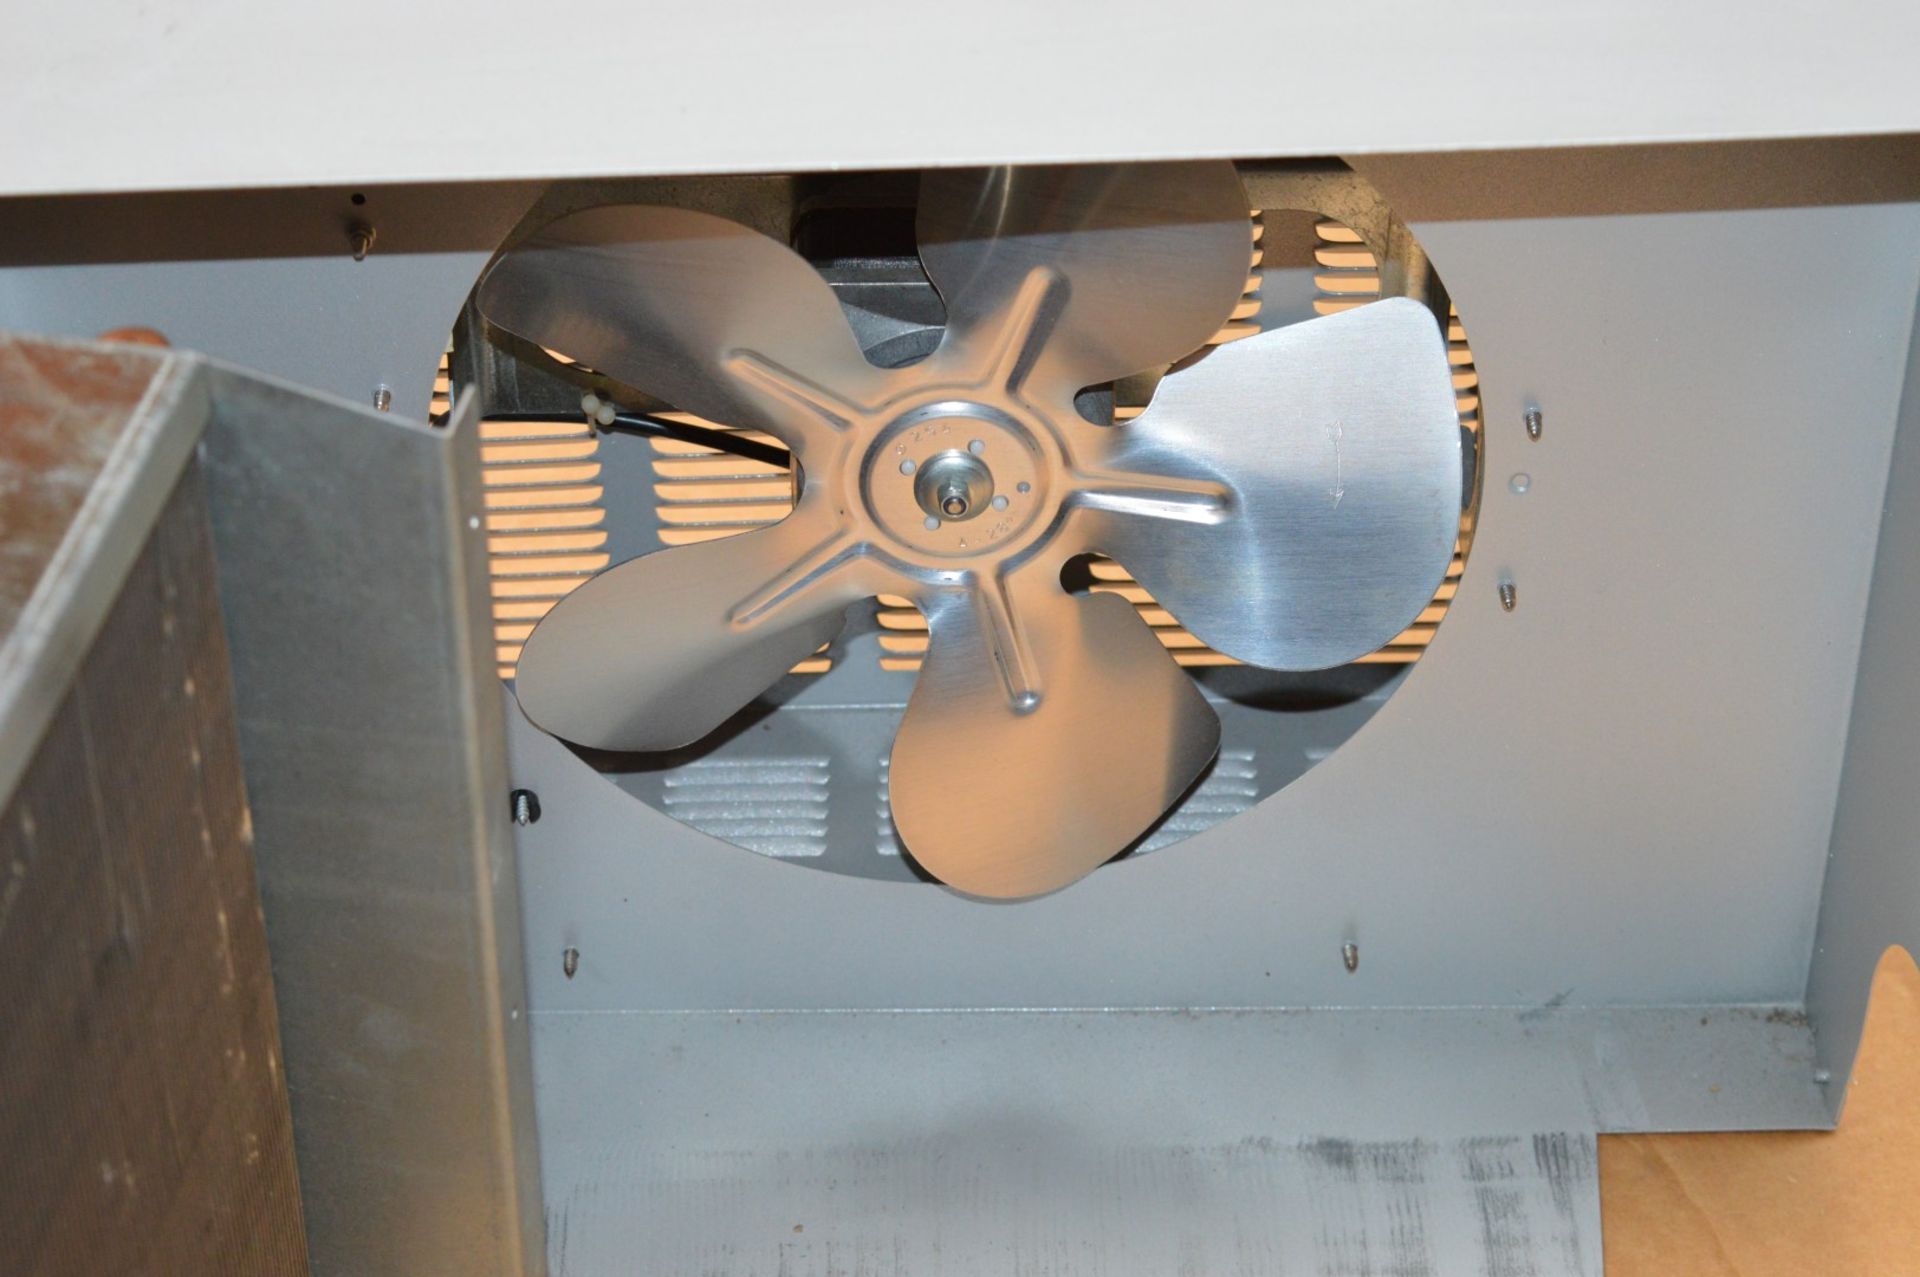 1 x Cornelius Heat Dump Unit For Cooled Split Cooling Systems - Model 061100502H - CL011 - Ref IT241 - Image 8 of 8